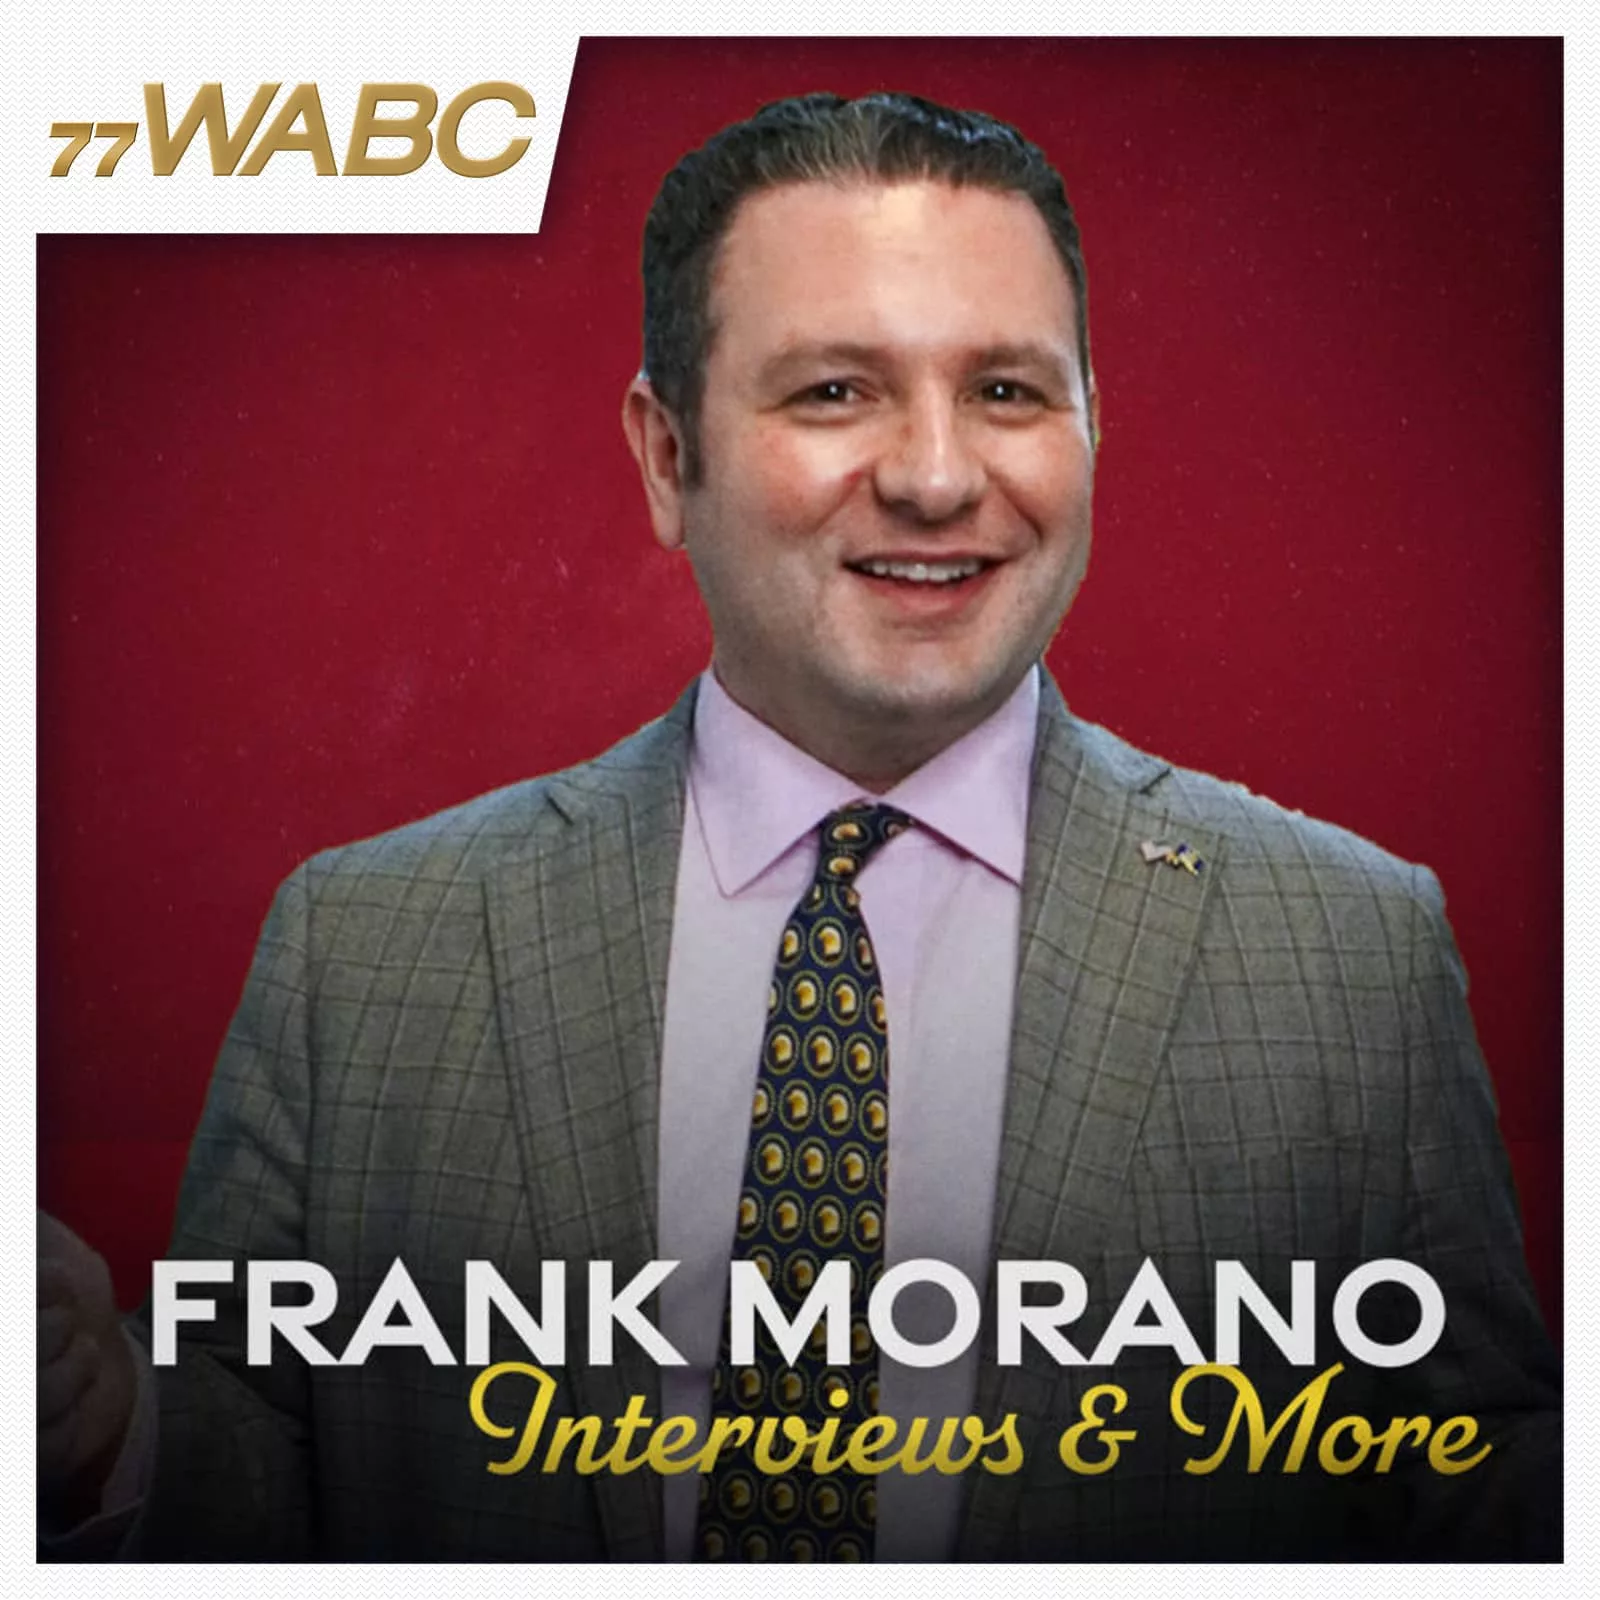 frank-morano-interviews-and-more-podcast-new-logo873111